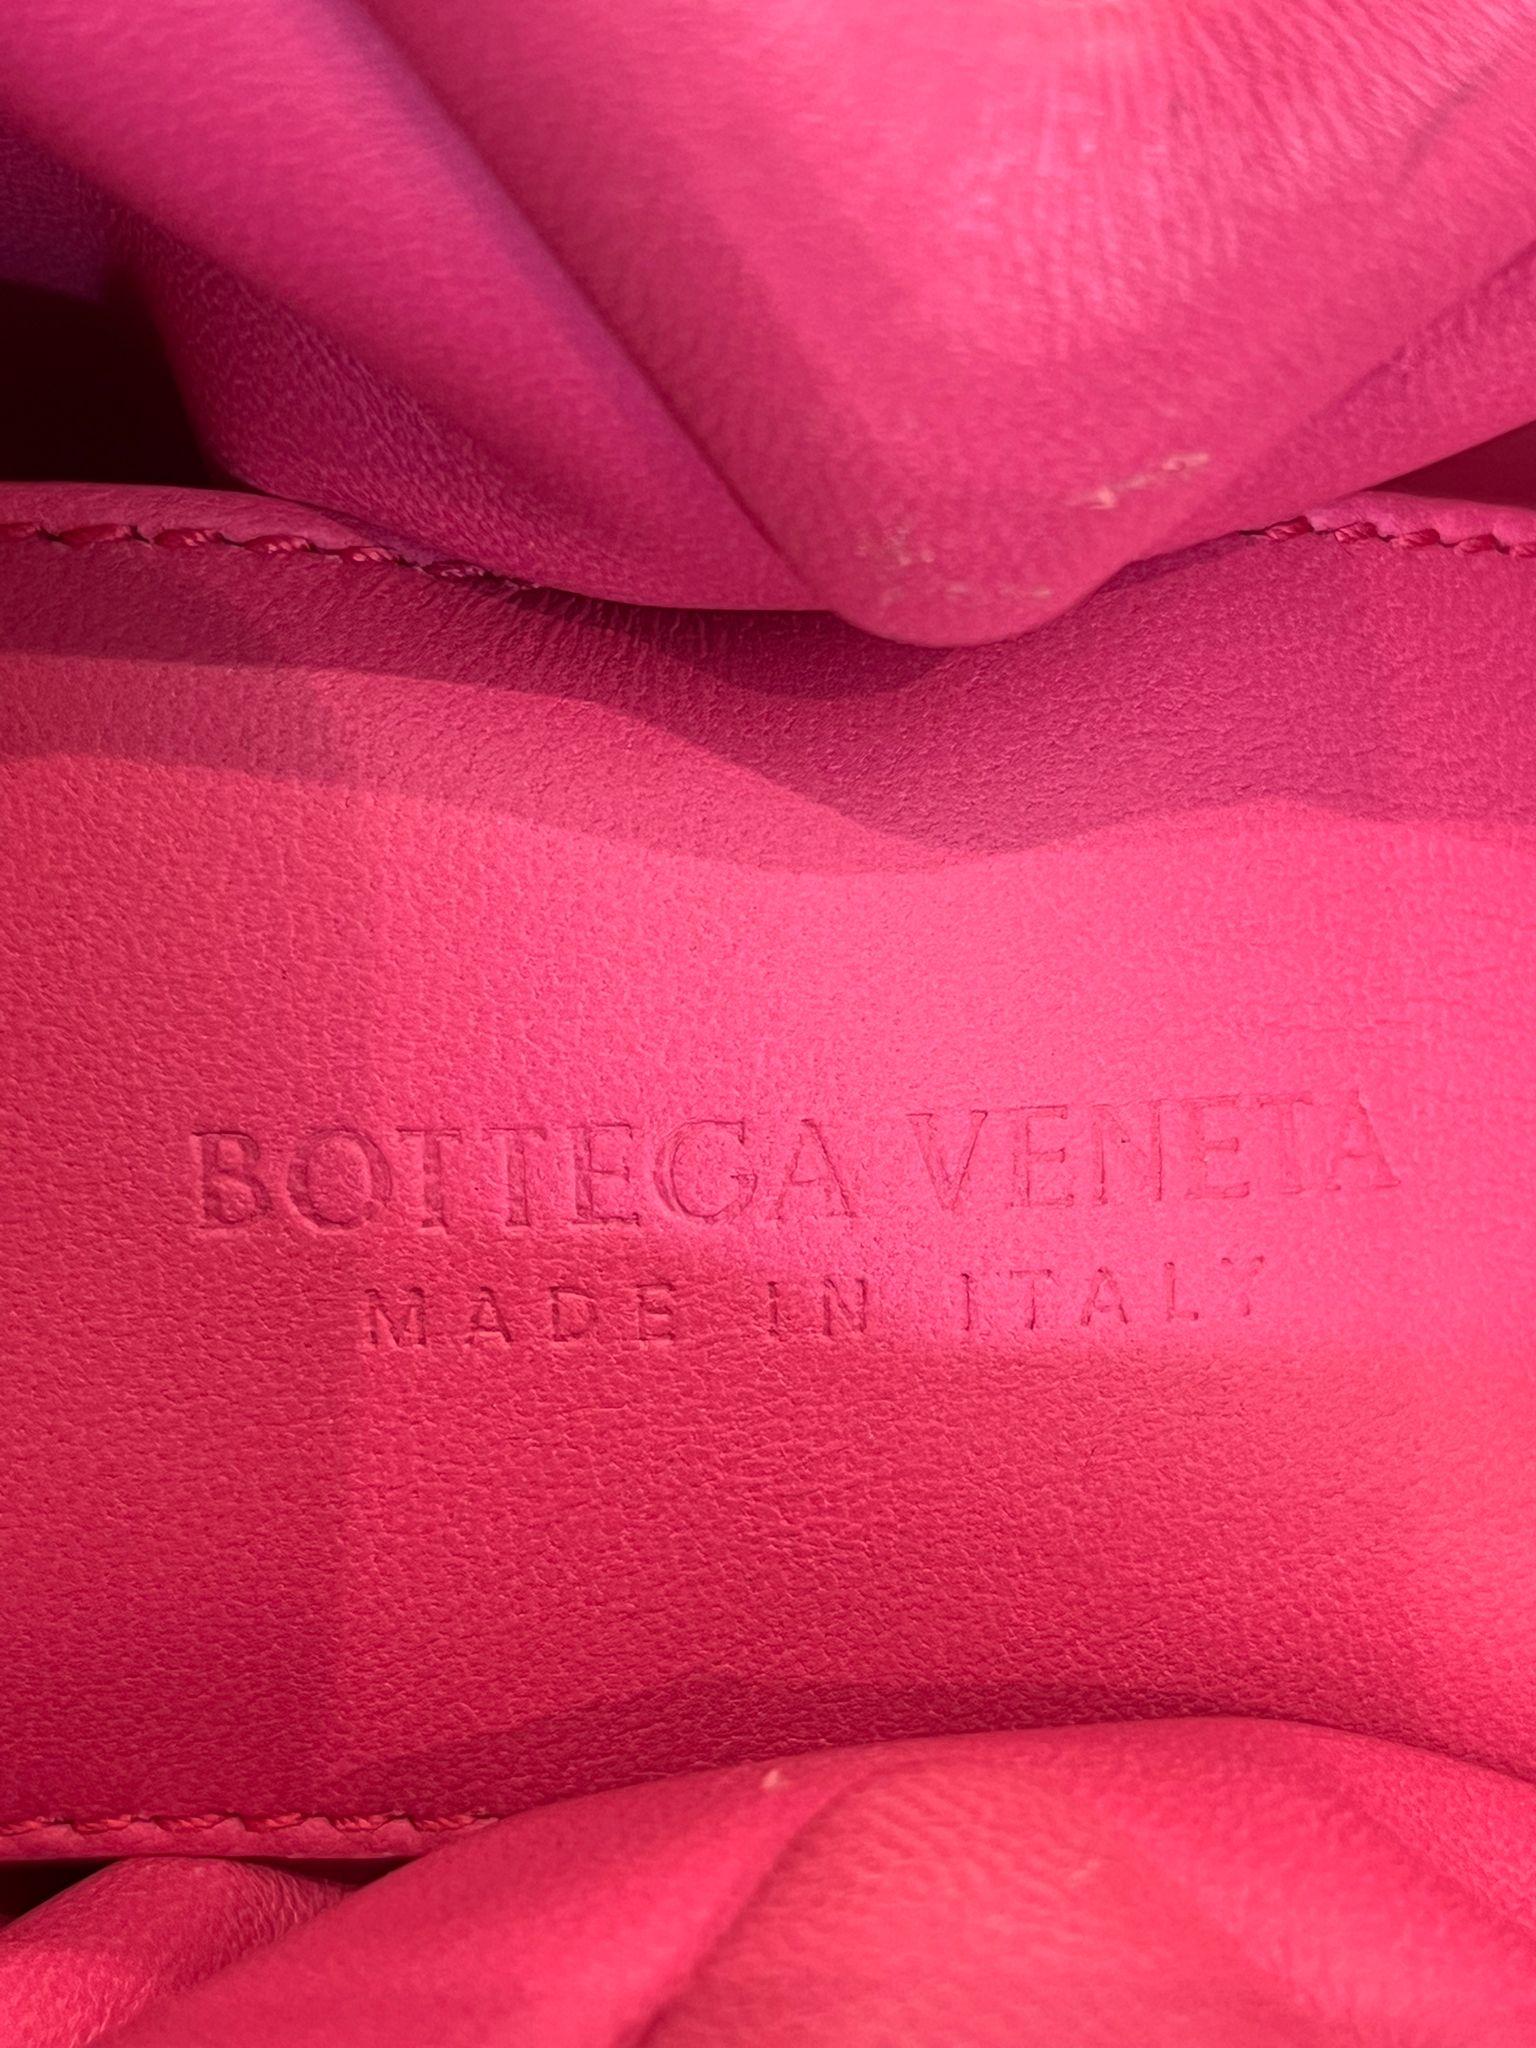 Bottega Veneta Curly Raffia Bag For Sale 3